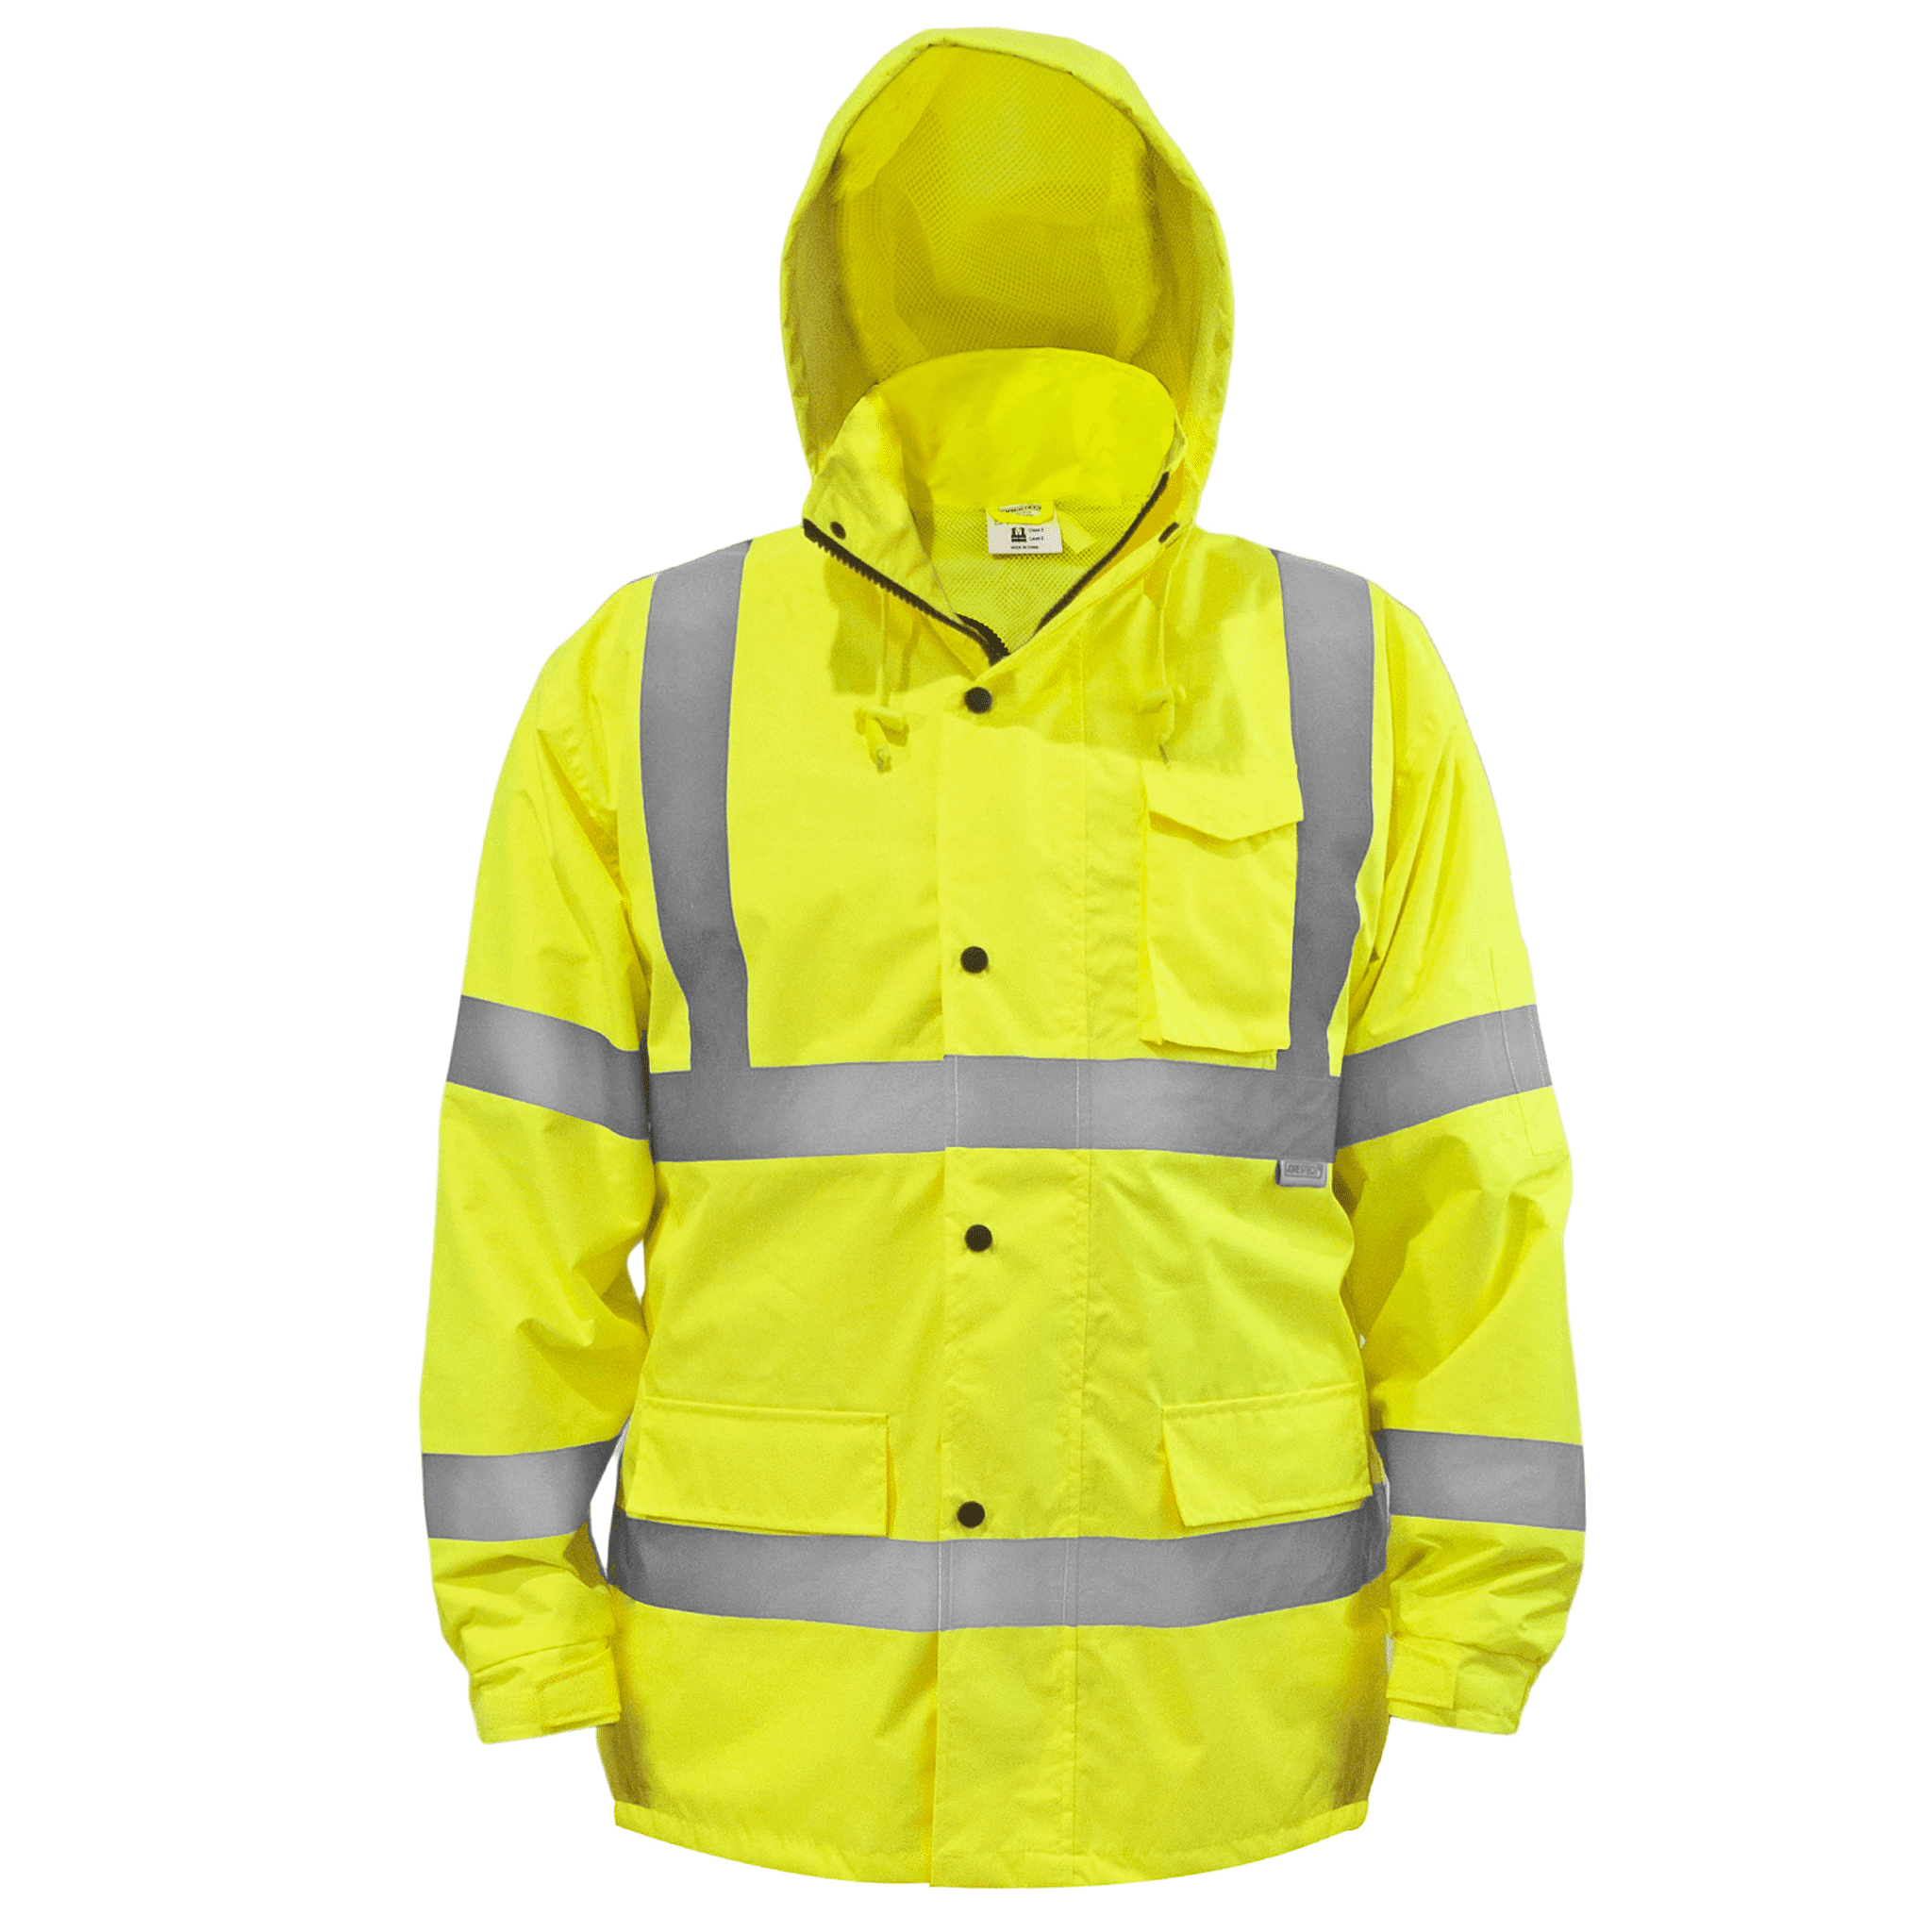 JORESTECH Hi-Vis Safety Rain Pants, ANSI Class E (Yellow/Black, 2XL)